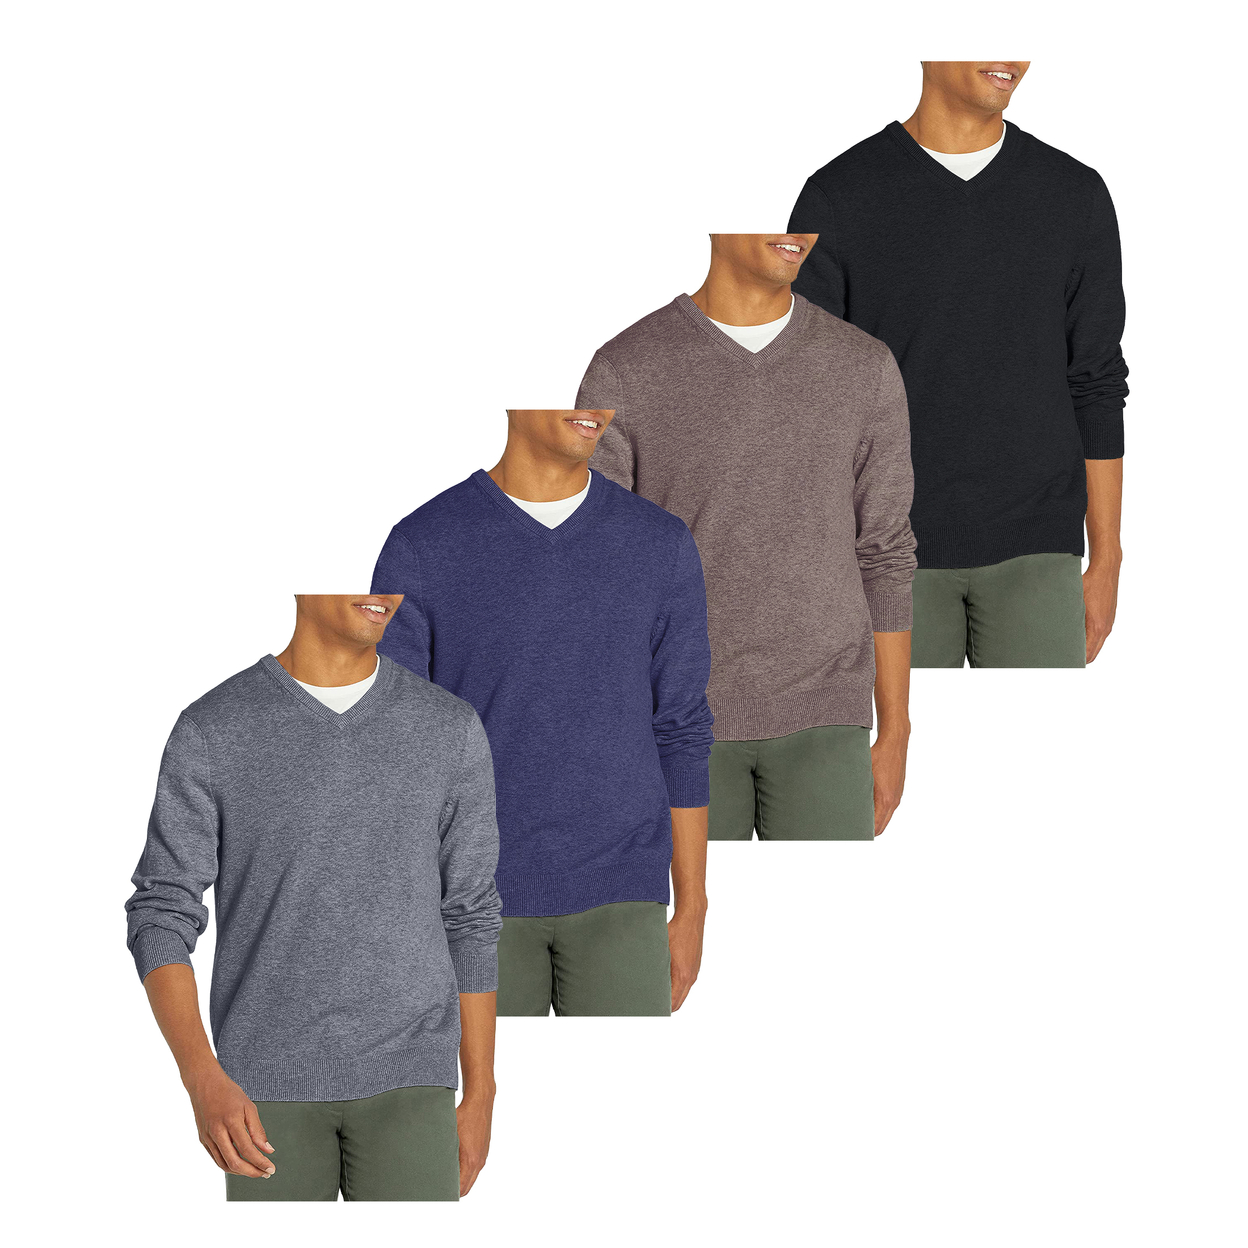 2-Pack: Men's Casual Ultra Soft Slim Fit Warm Knit V-Neck Sweater - Black & Brown, X-large